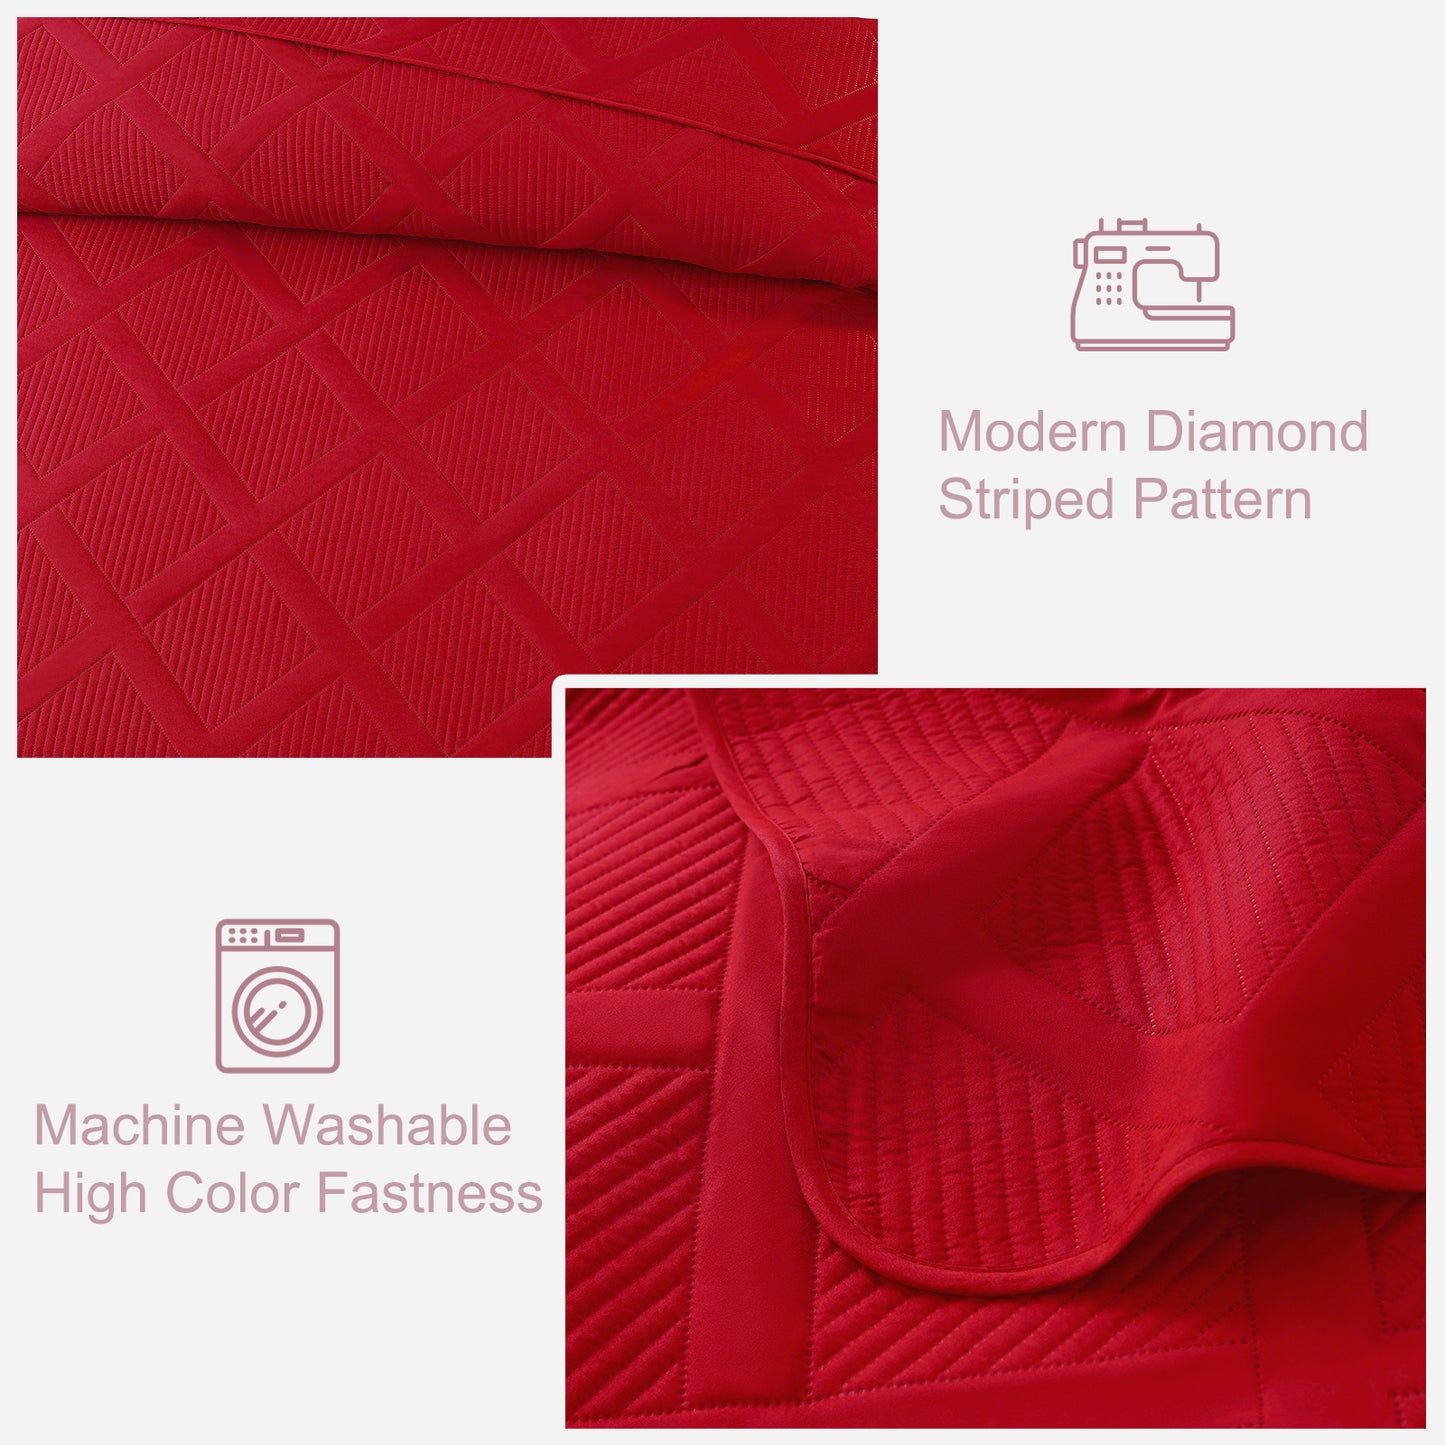 Exclusivo Mezcla Ultrasonic Full Queen Quilt Set, Lightweight Bedspreads Modern Striped Coverlet with 2 Pillow Shams, Red